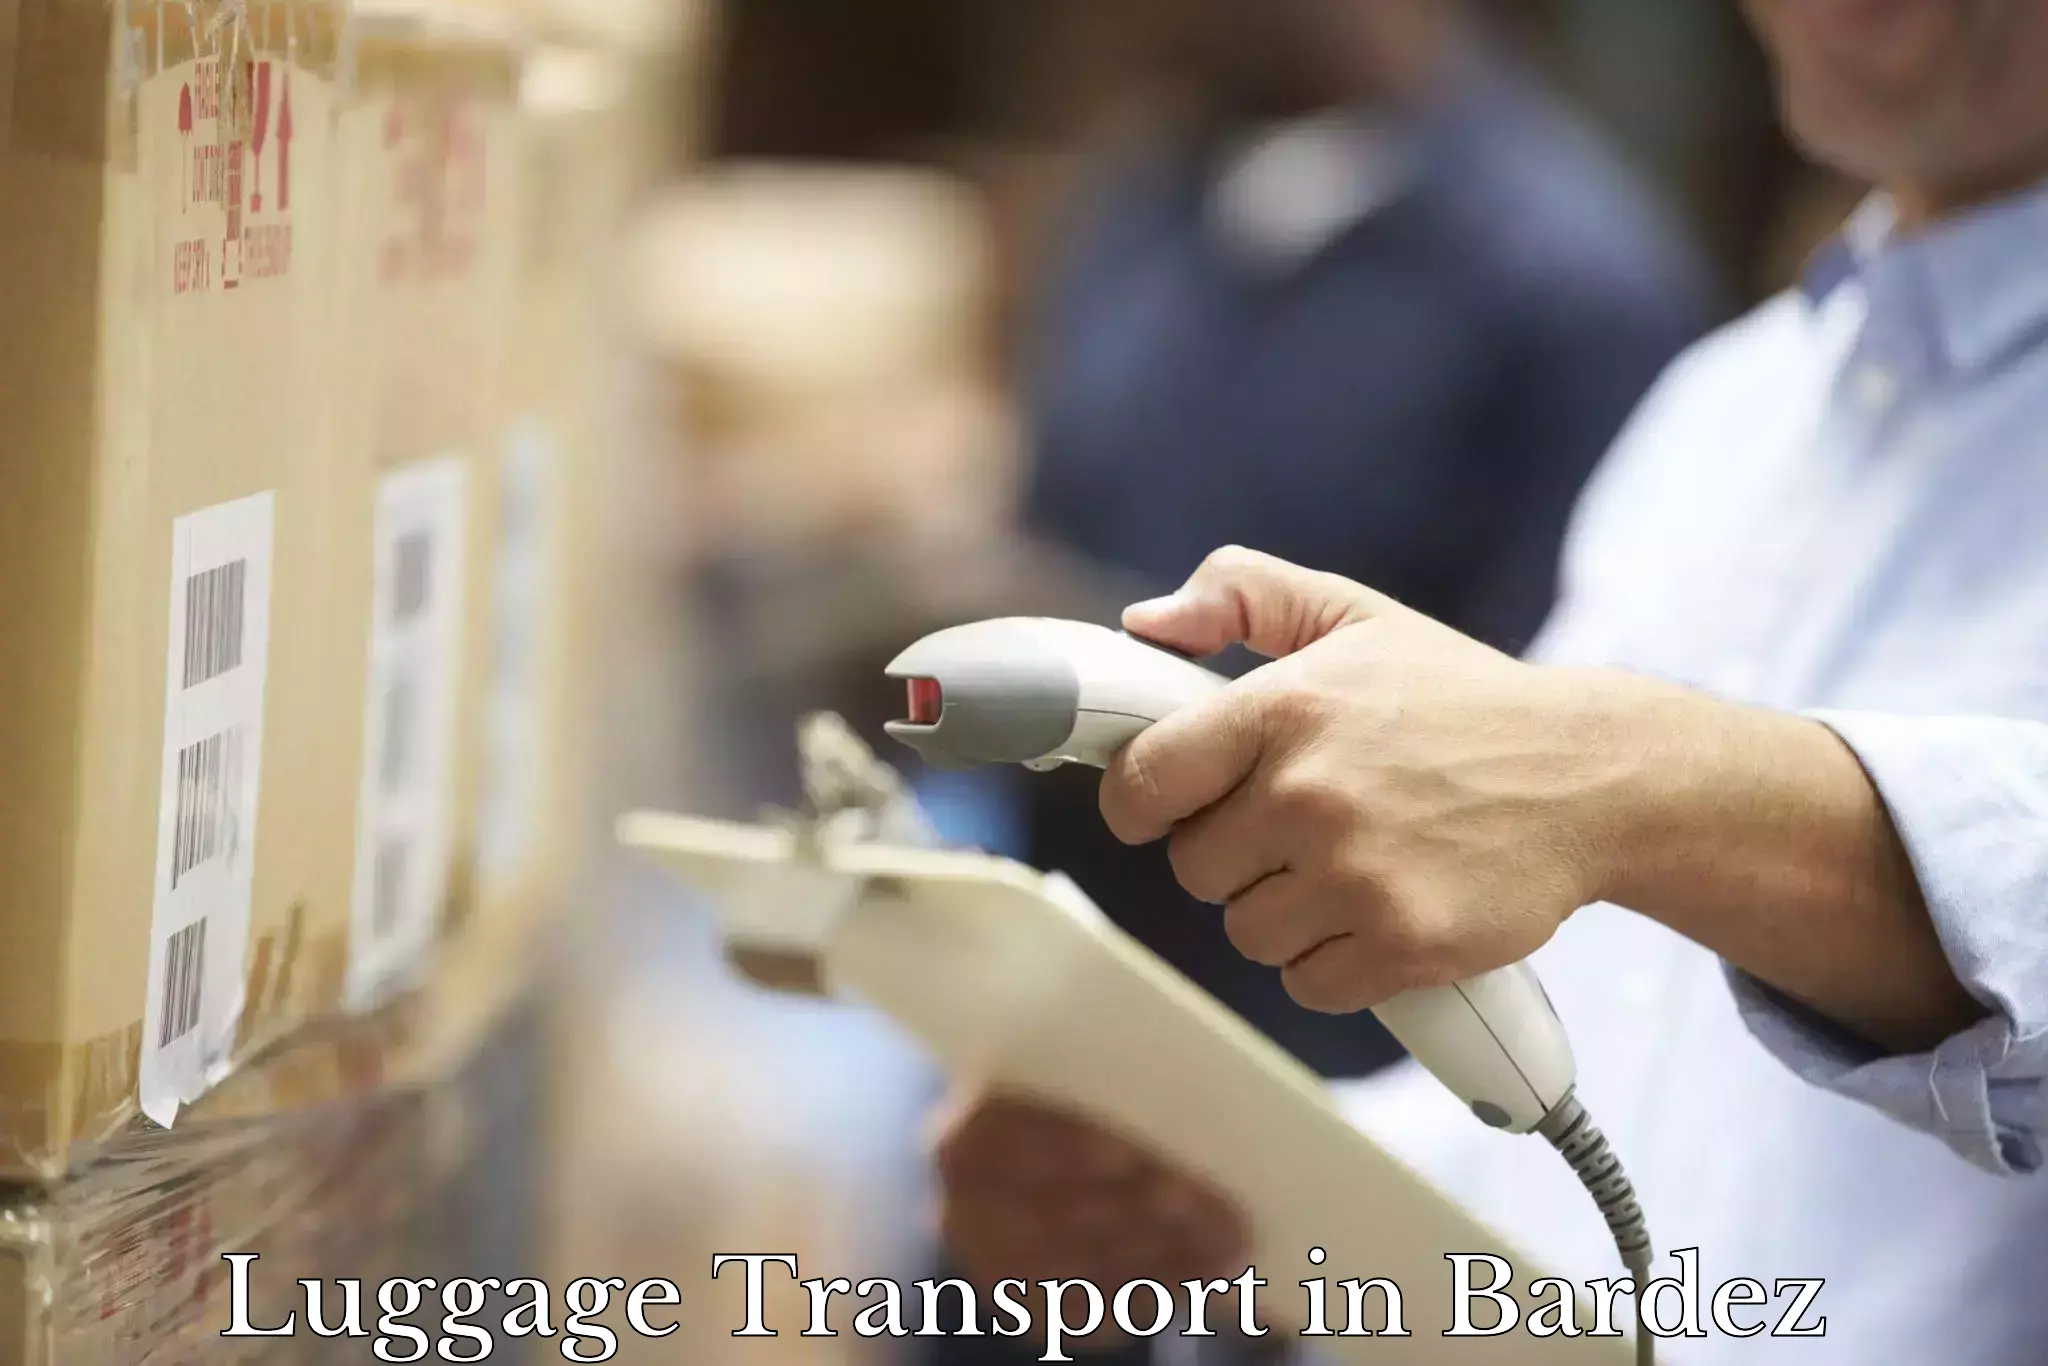 Luggage transit service in Bardez